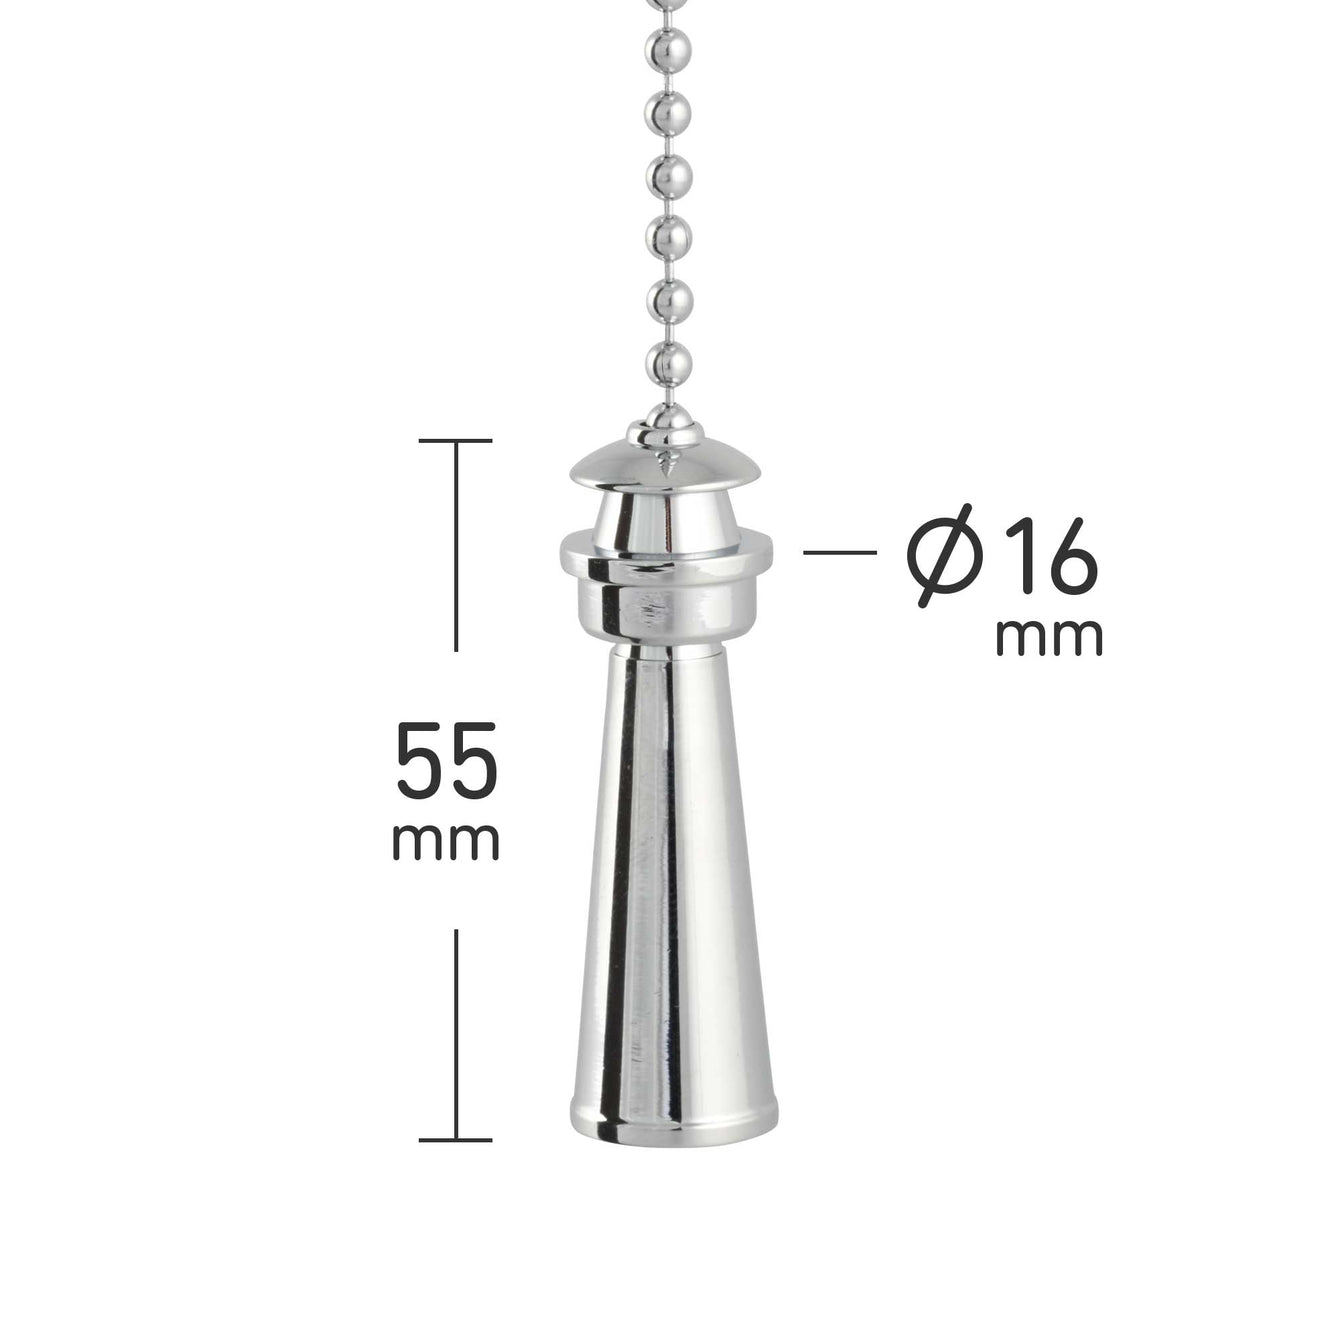 ElekTek Light Pull Chain Lighthouse With 80cm Matching Chain 